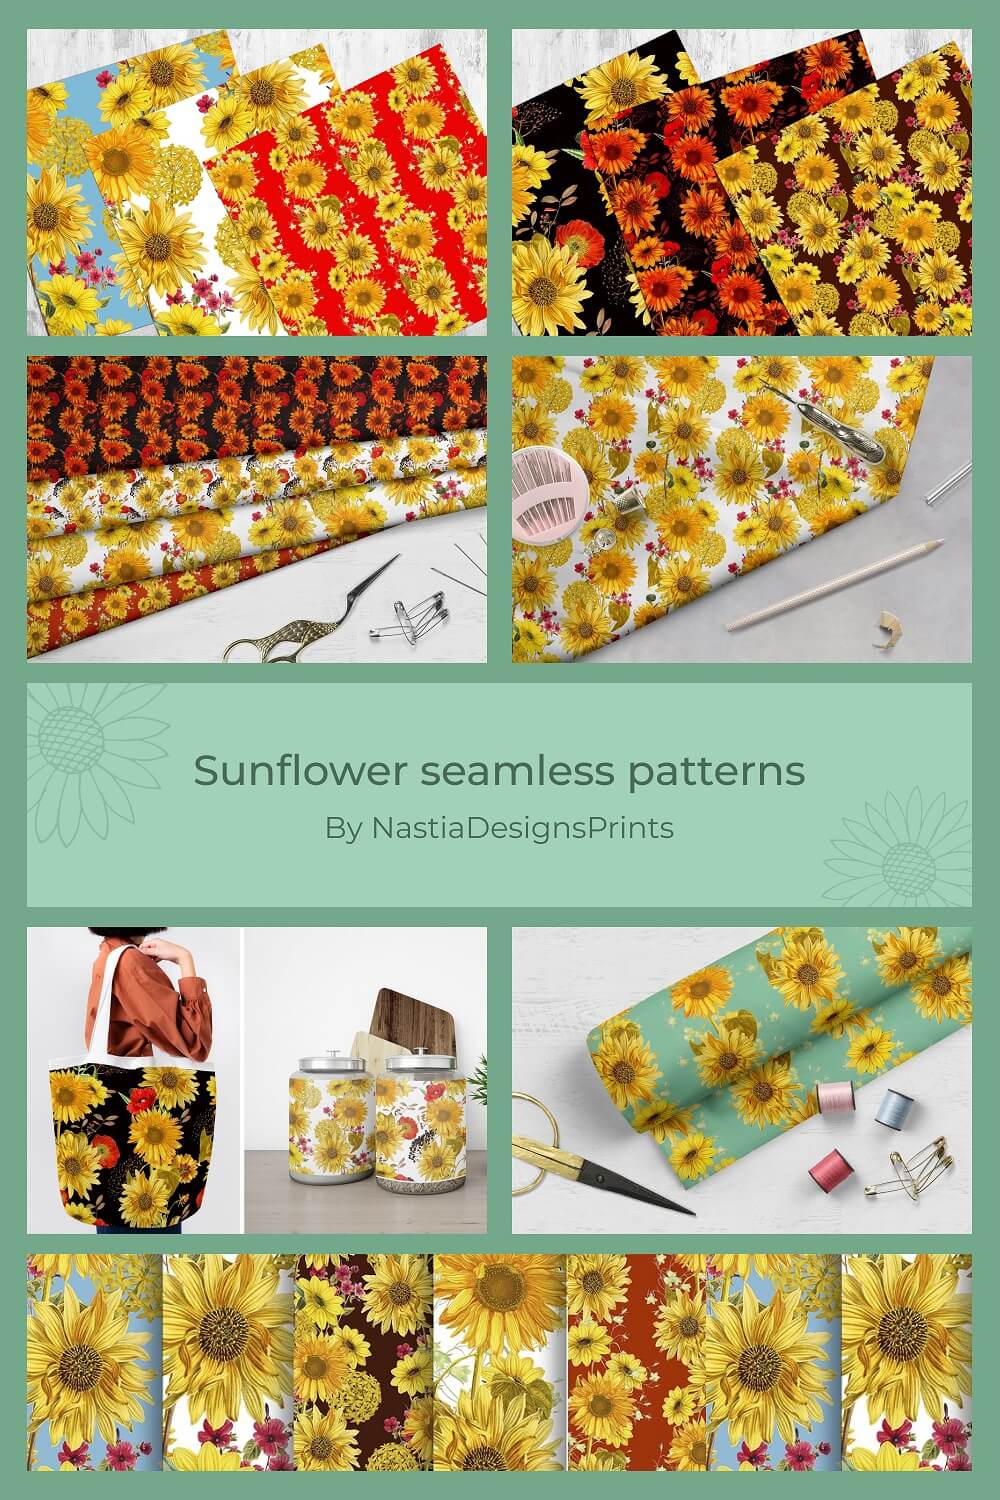 Fabrics from Sunflower Seamless Patterns.